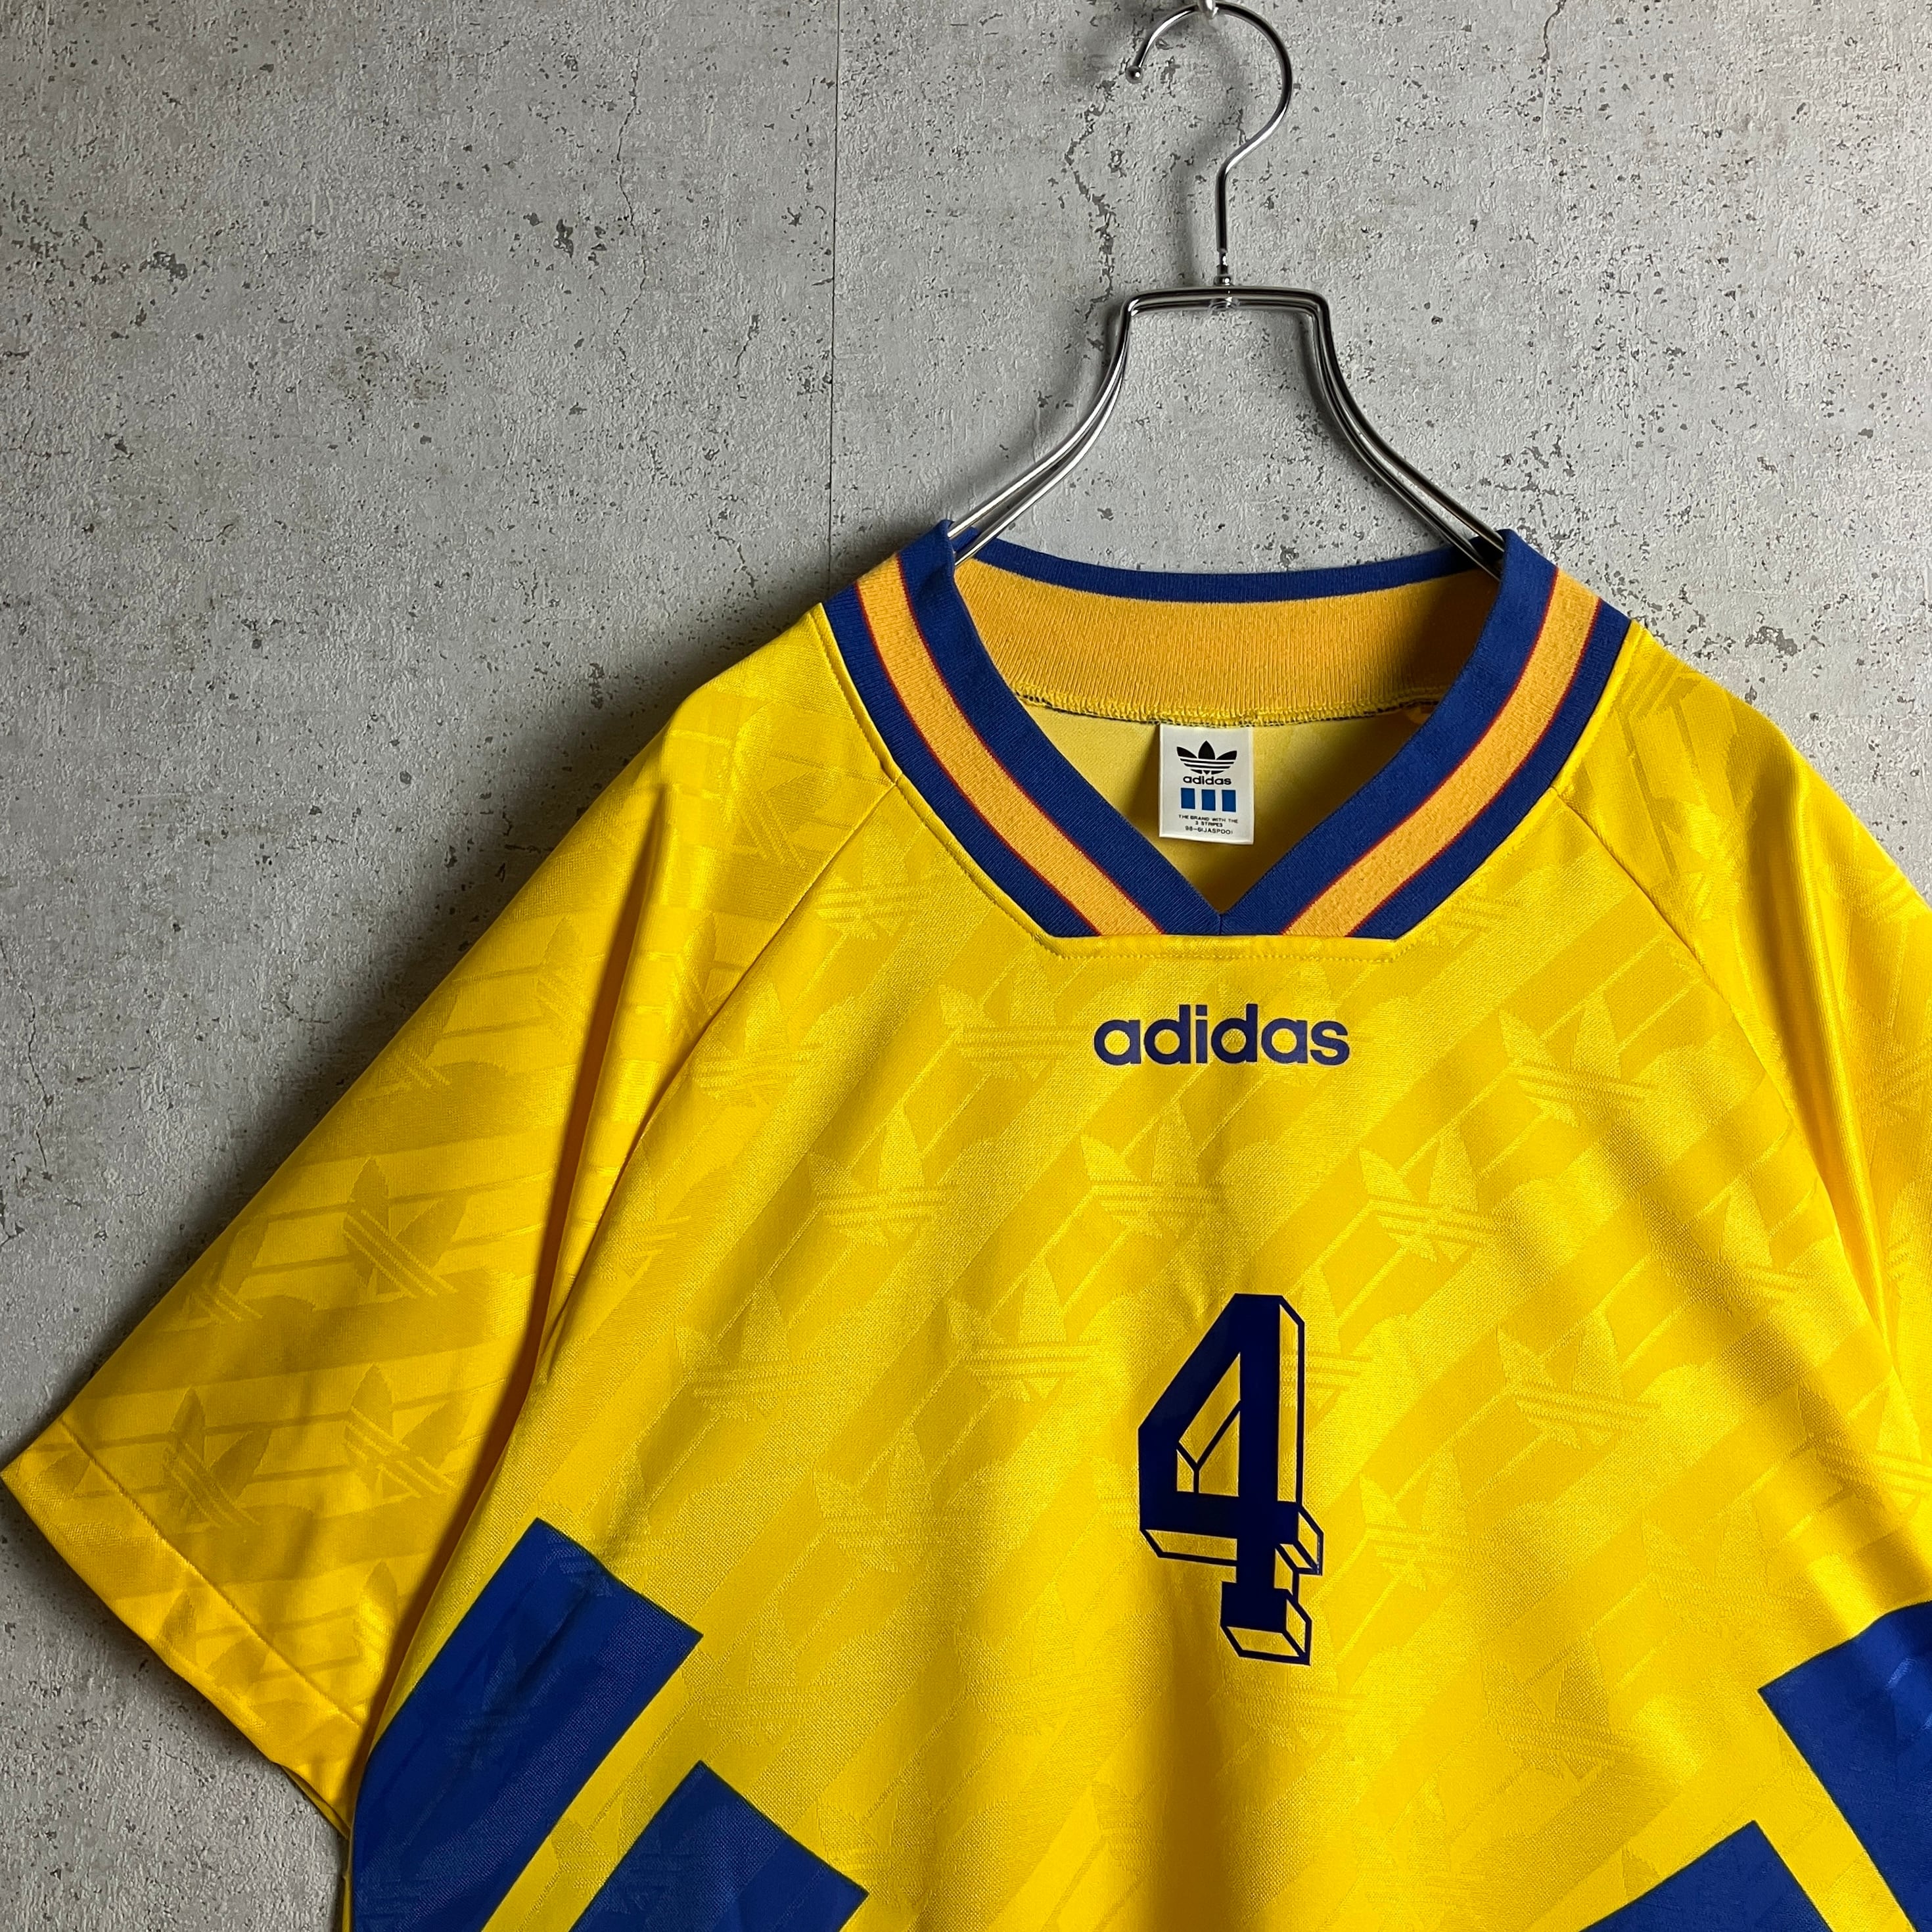 00s Adidas アディダス ゲームシャツ サッカー シルバー Y2K